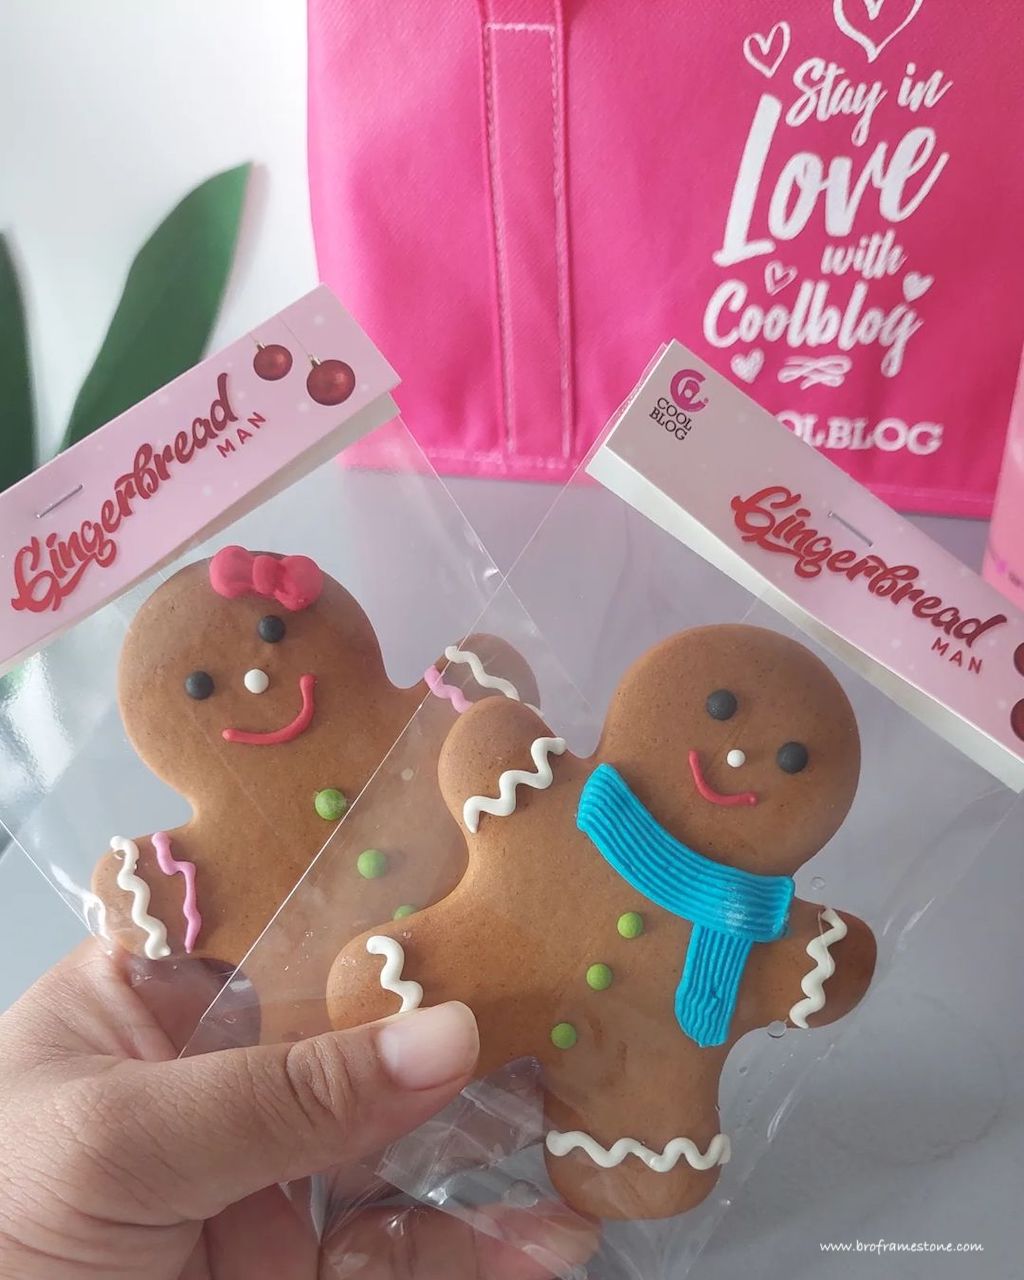 coolblog gingerbread